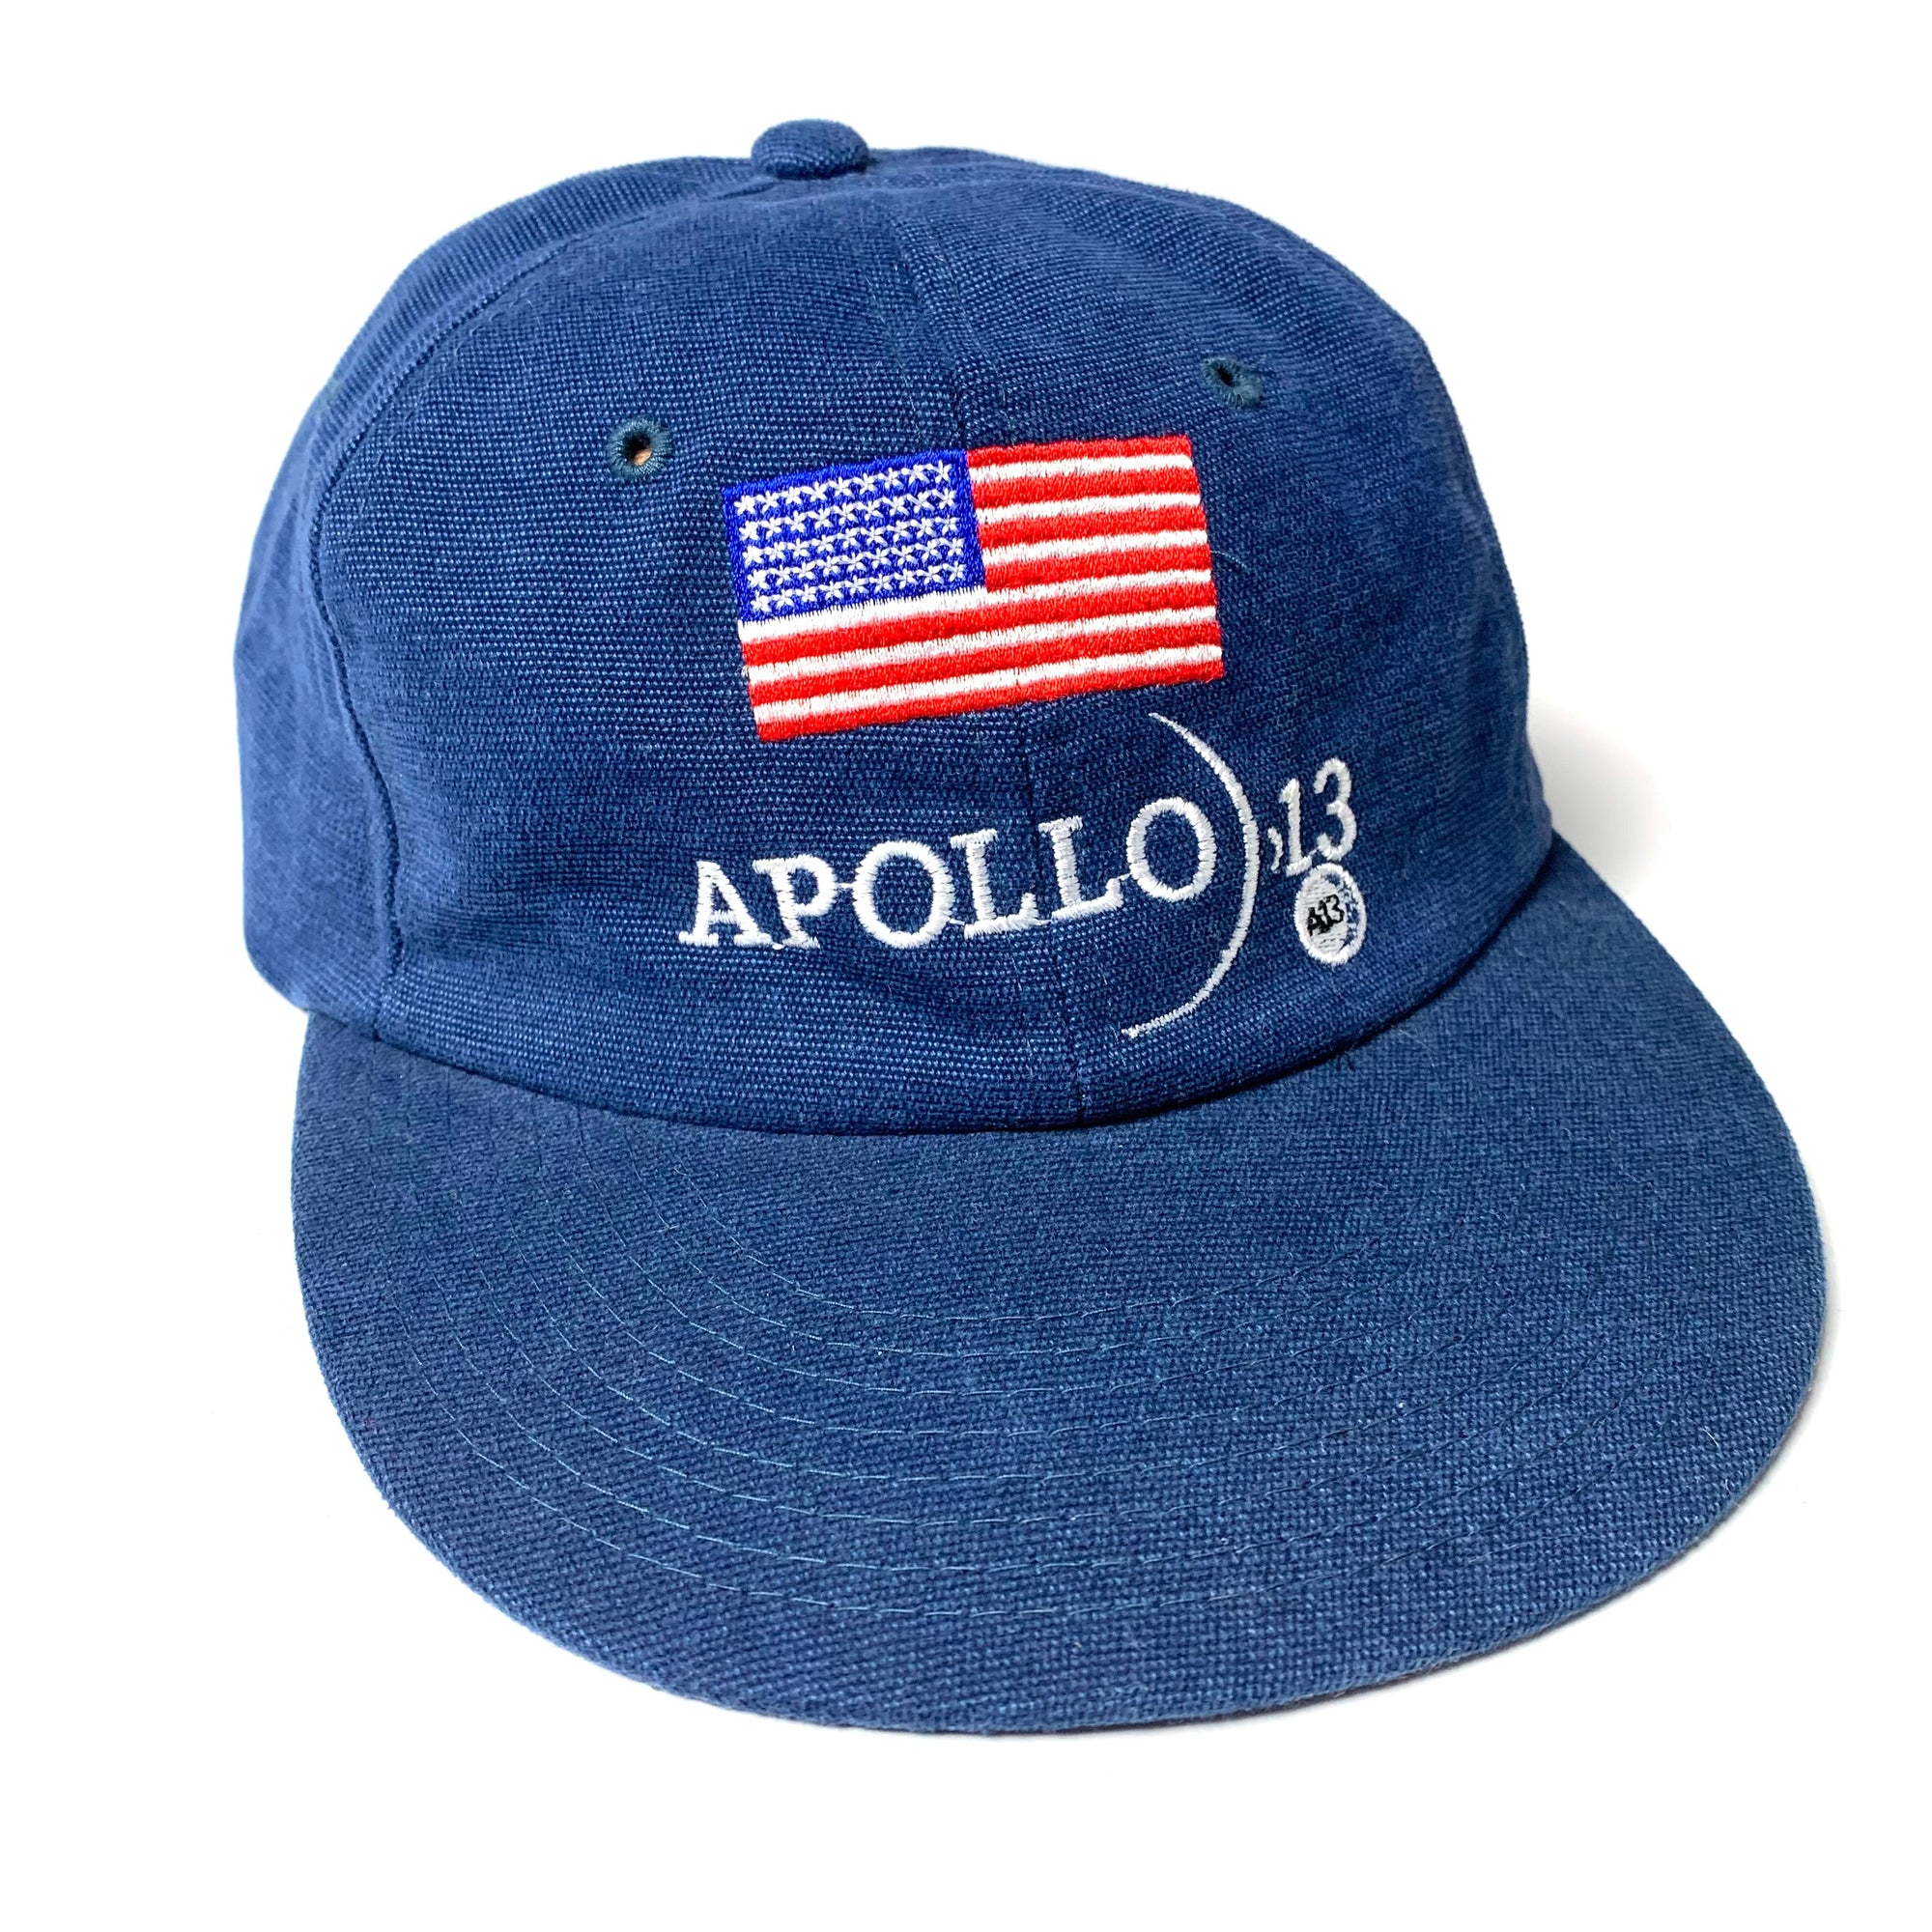 Vintage APOLLO13 movie cap - キャップ